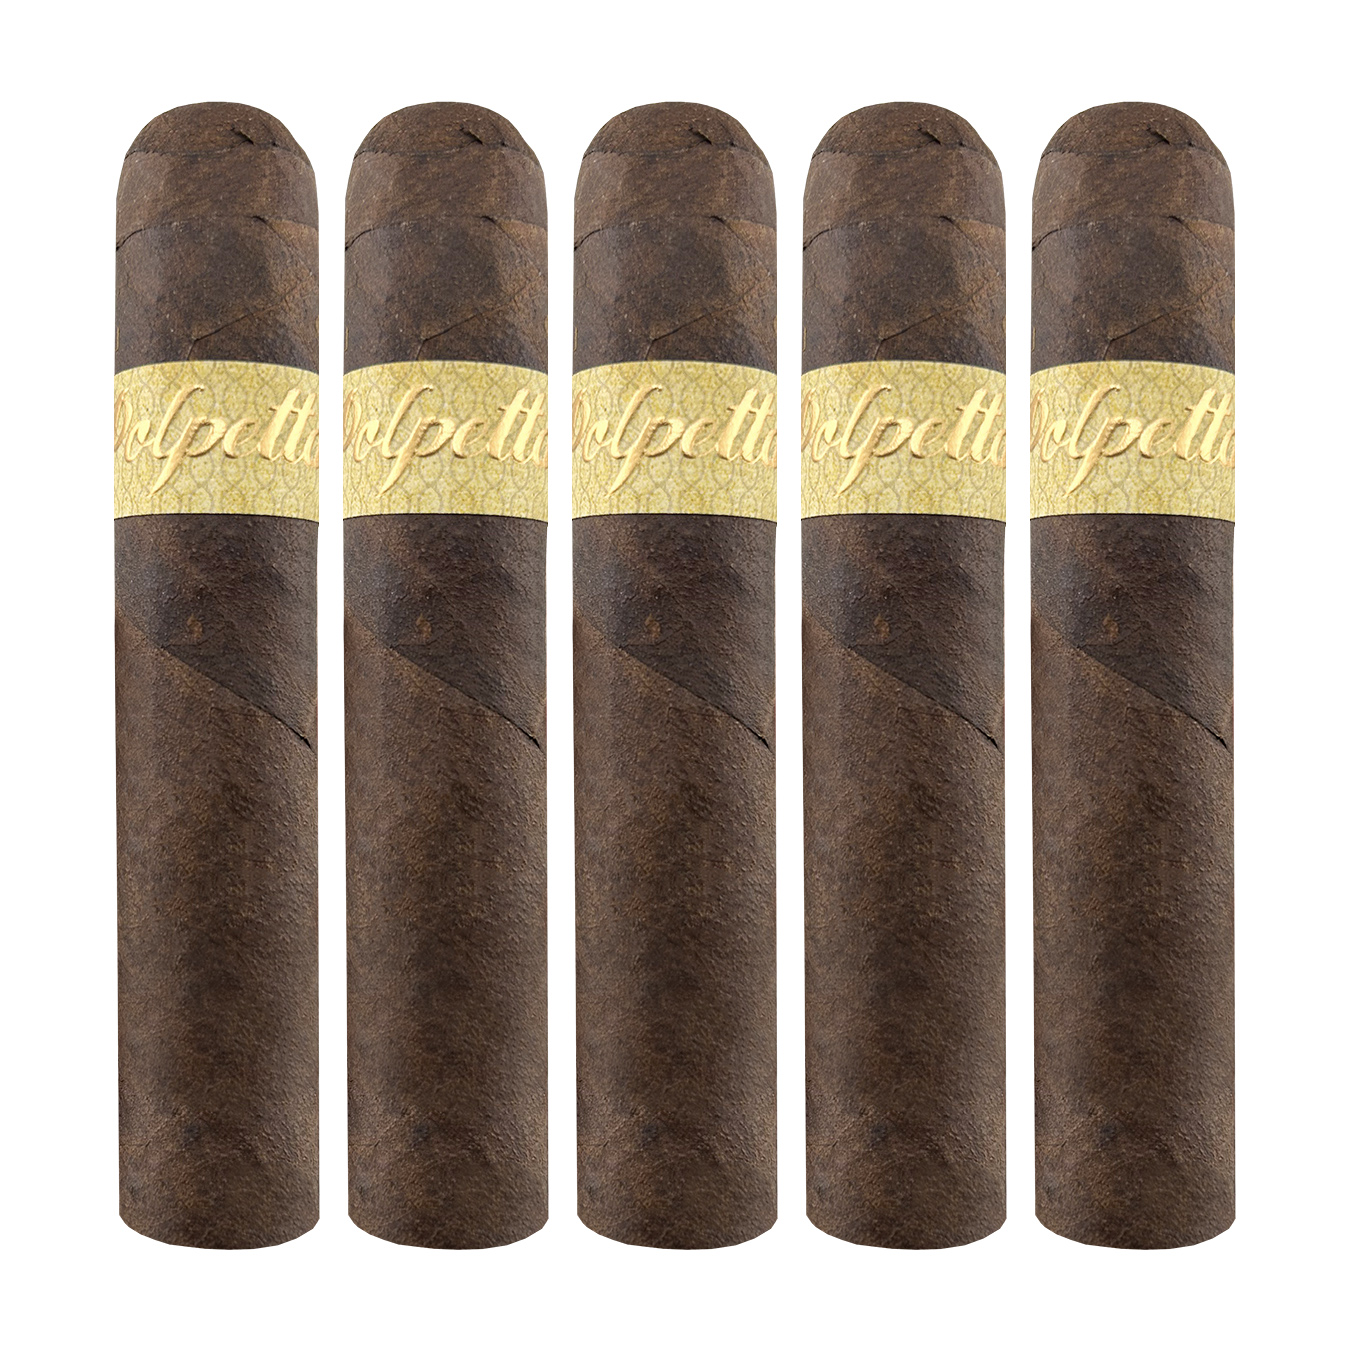 Polpetta Petit Robusto Cigar - 5 Pack